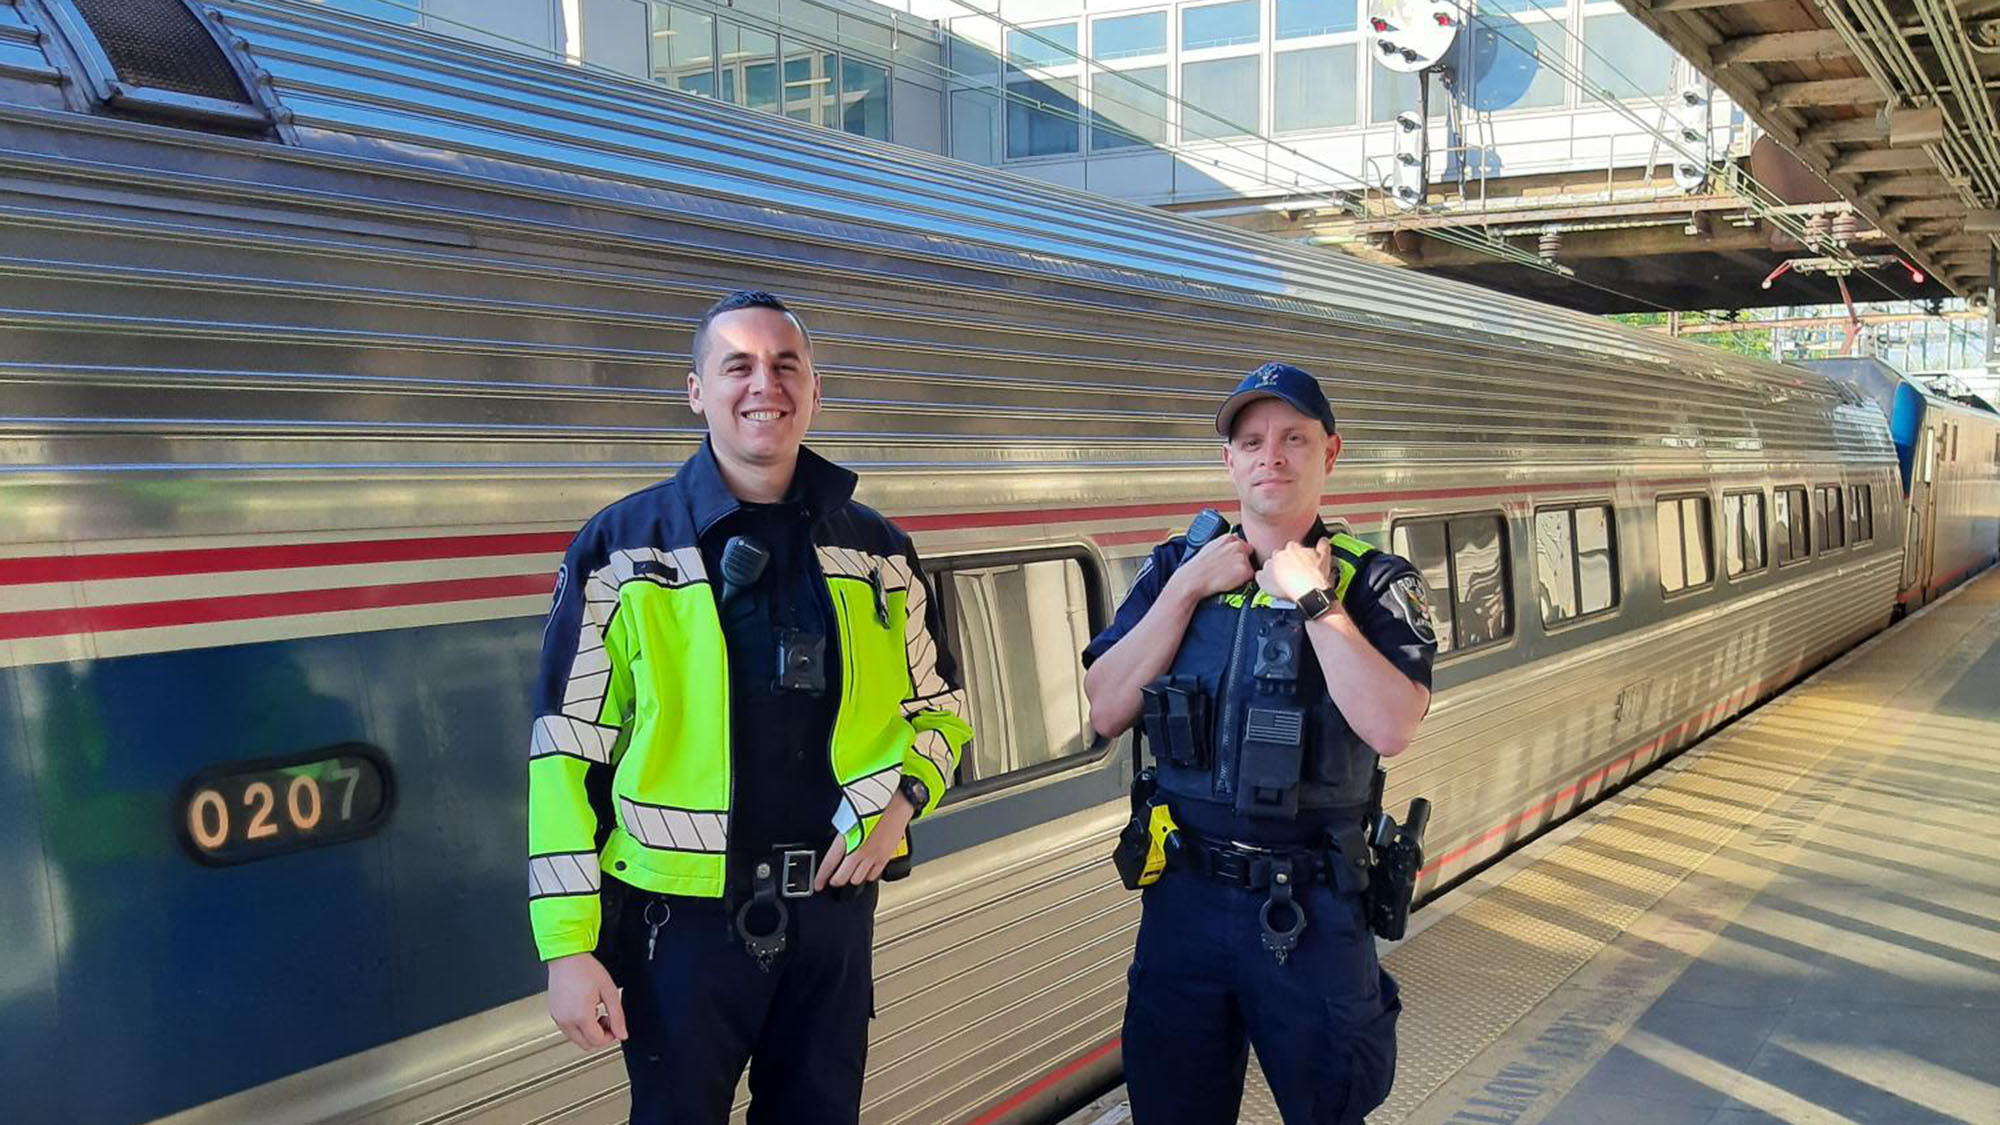 APD Officers on the Platform at Washington - Union Station